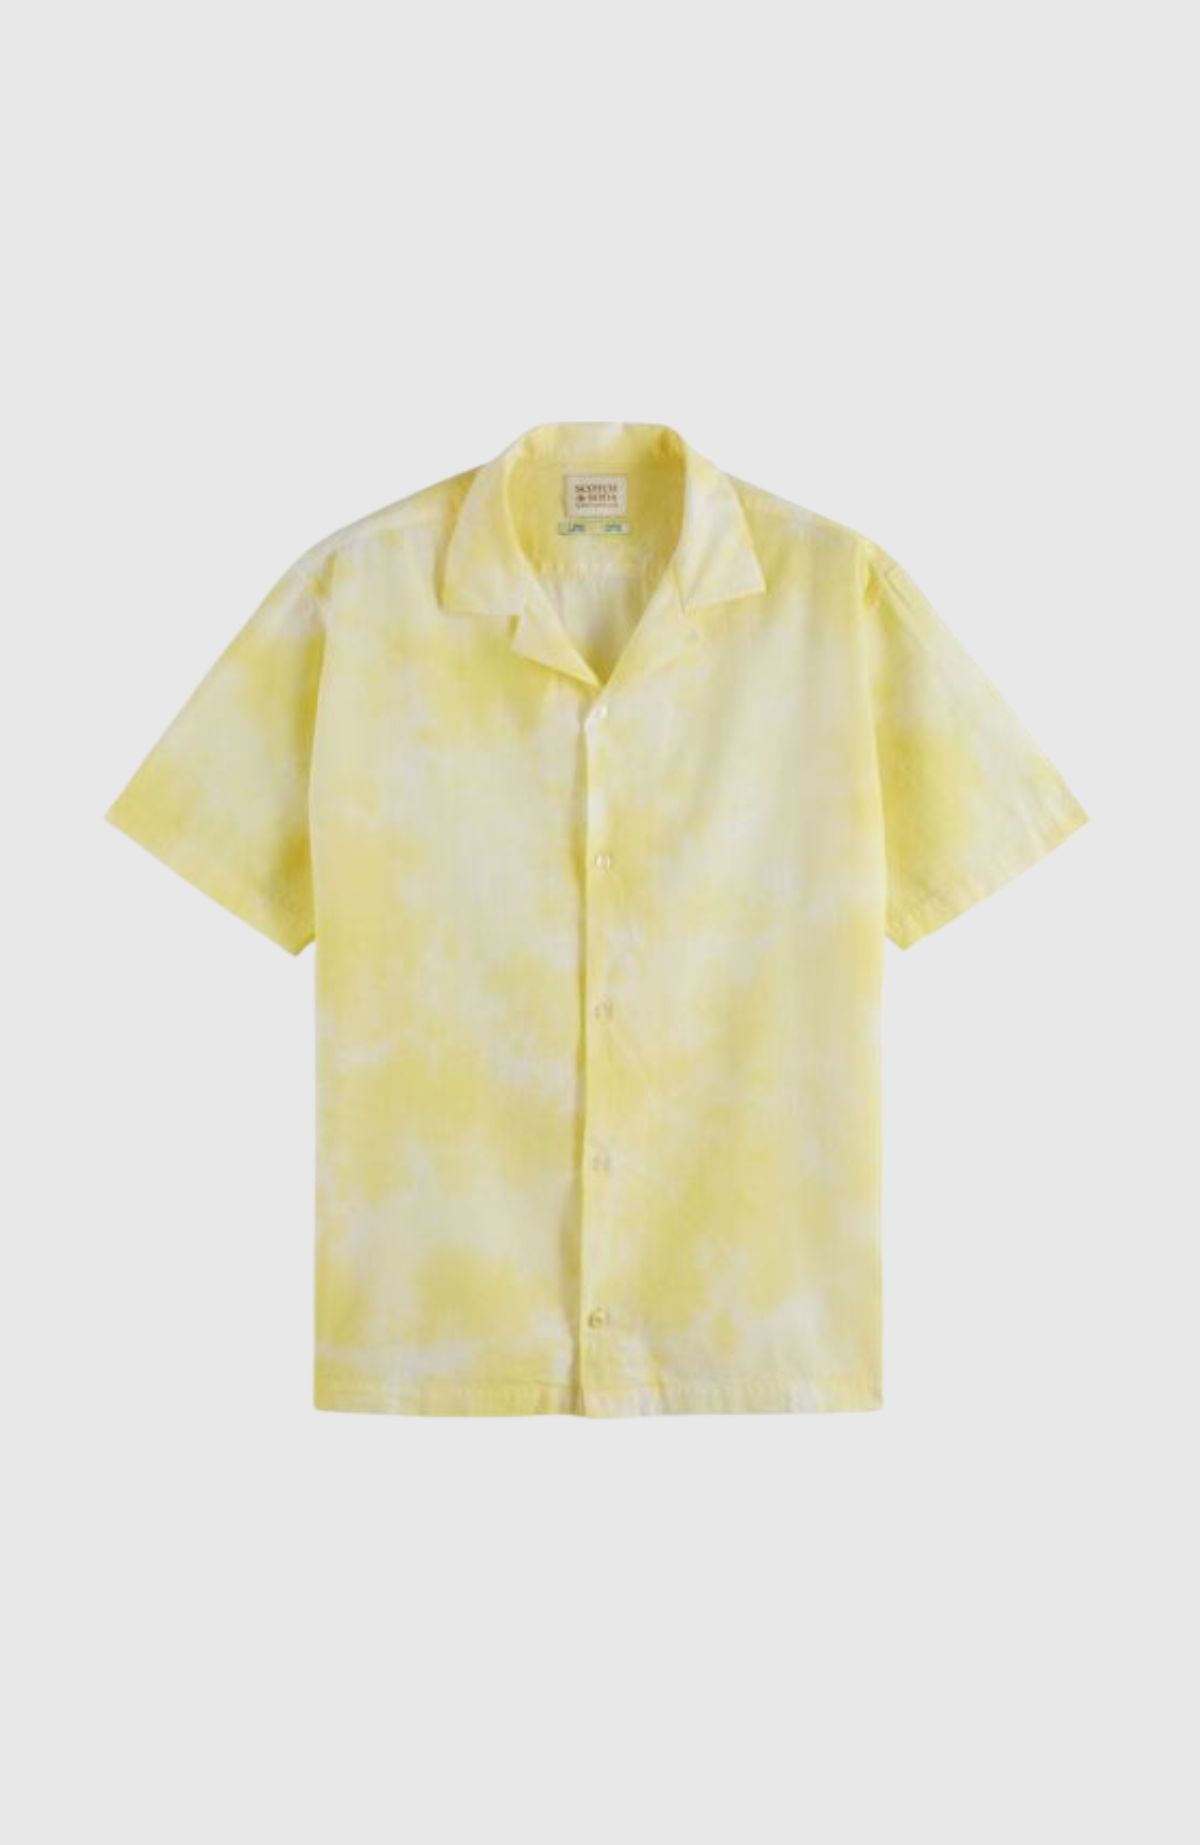 Detailed Tie-dyed linen blend shirt